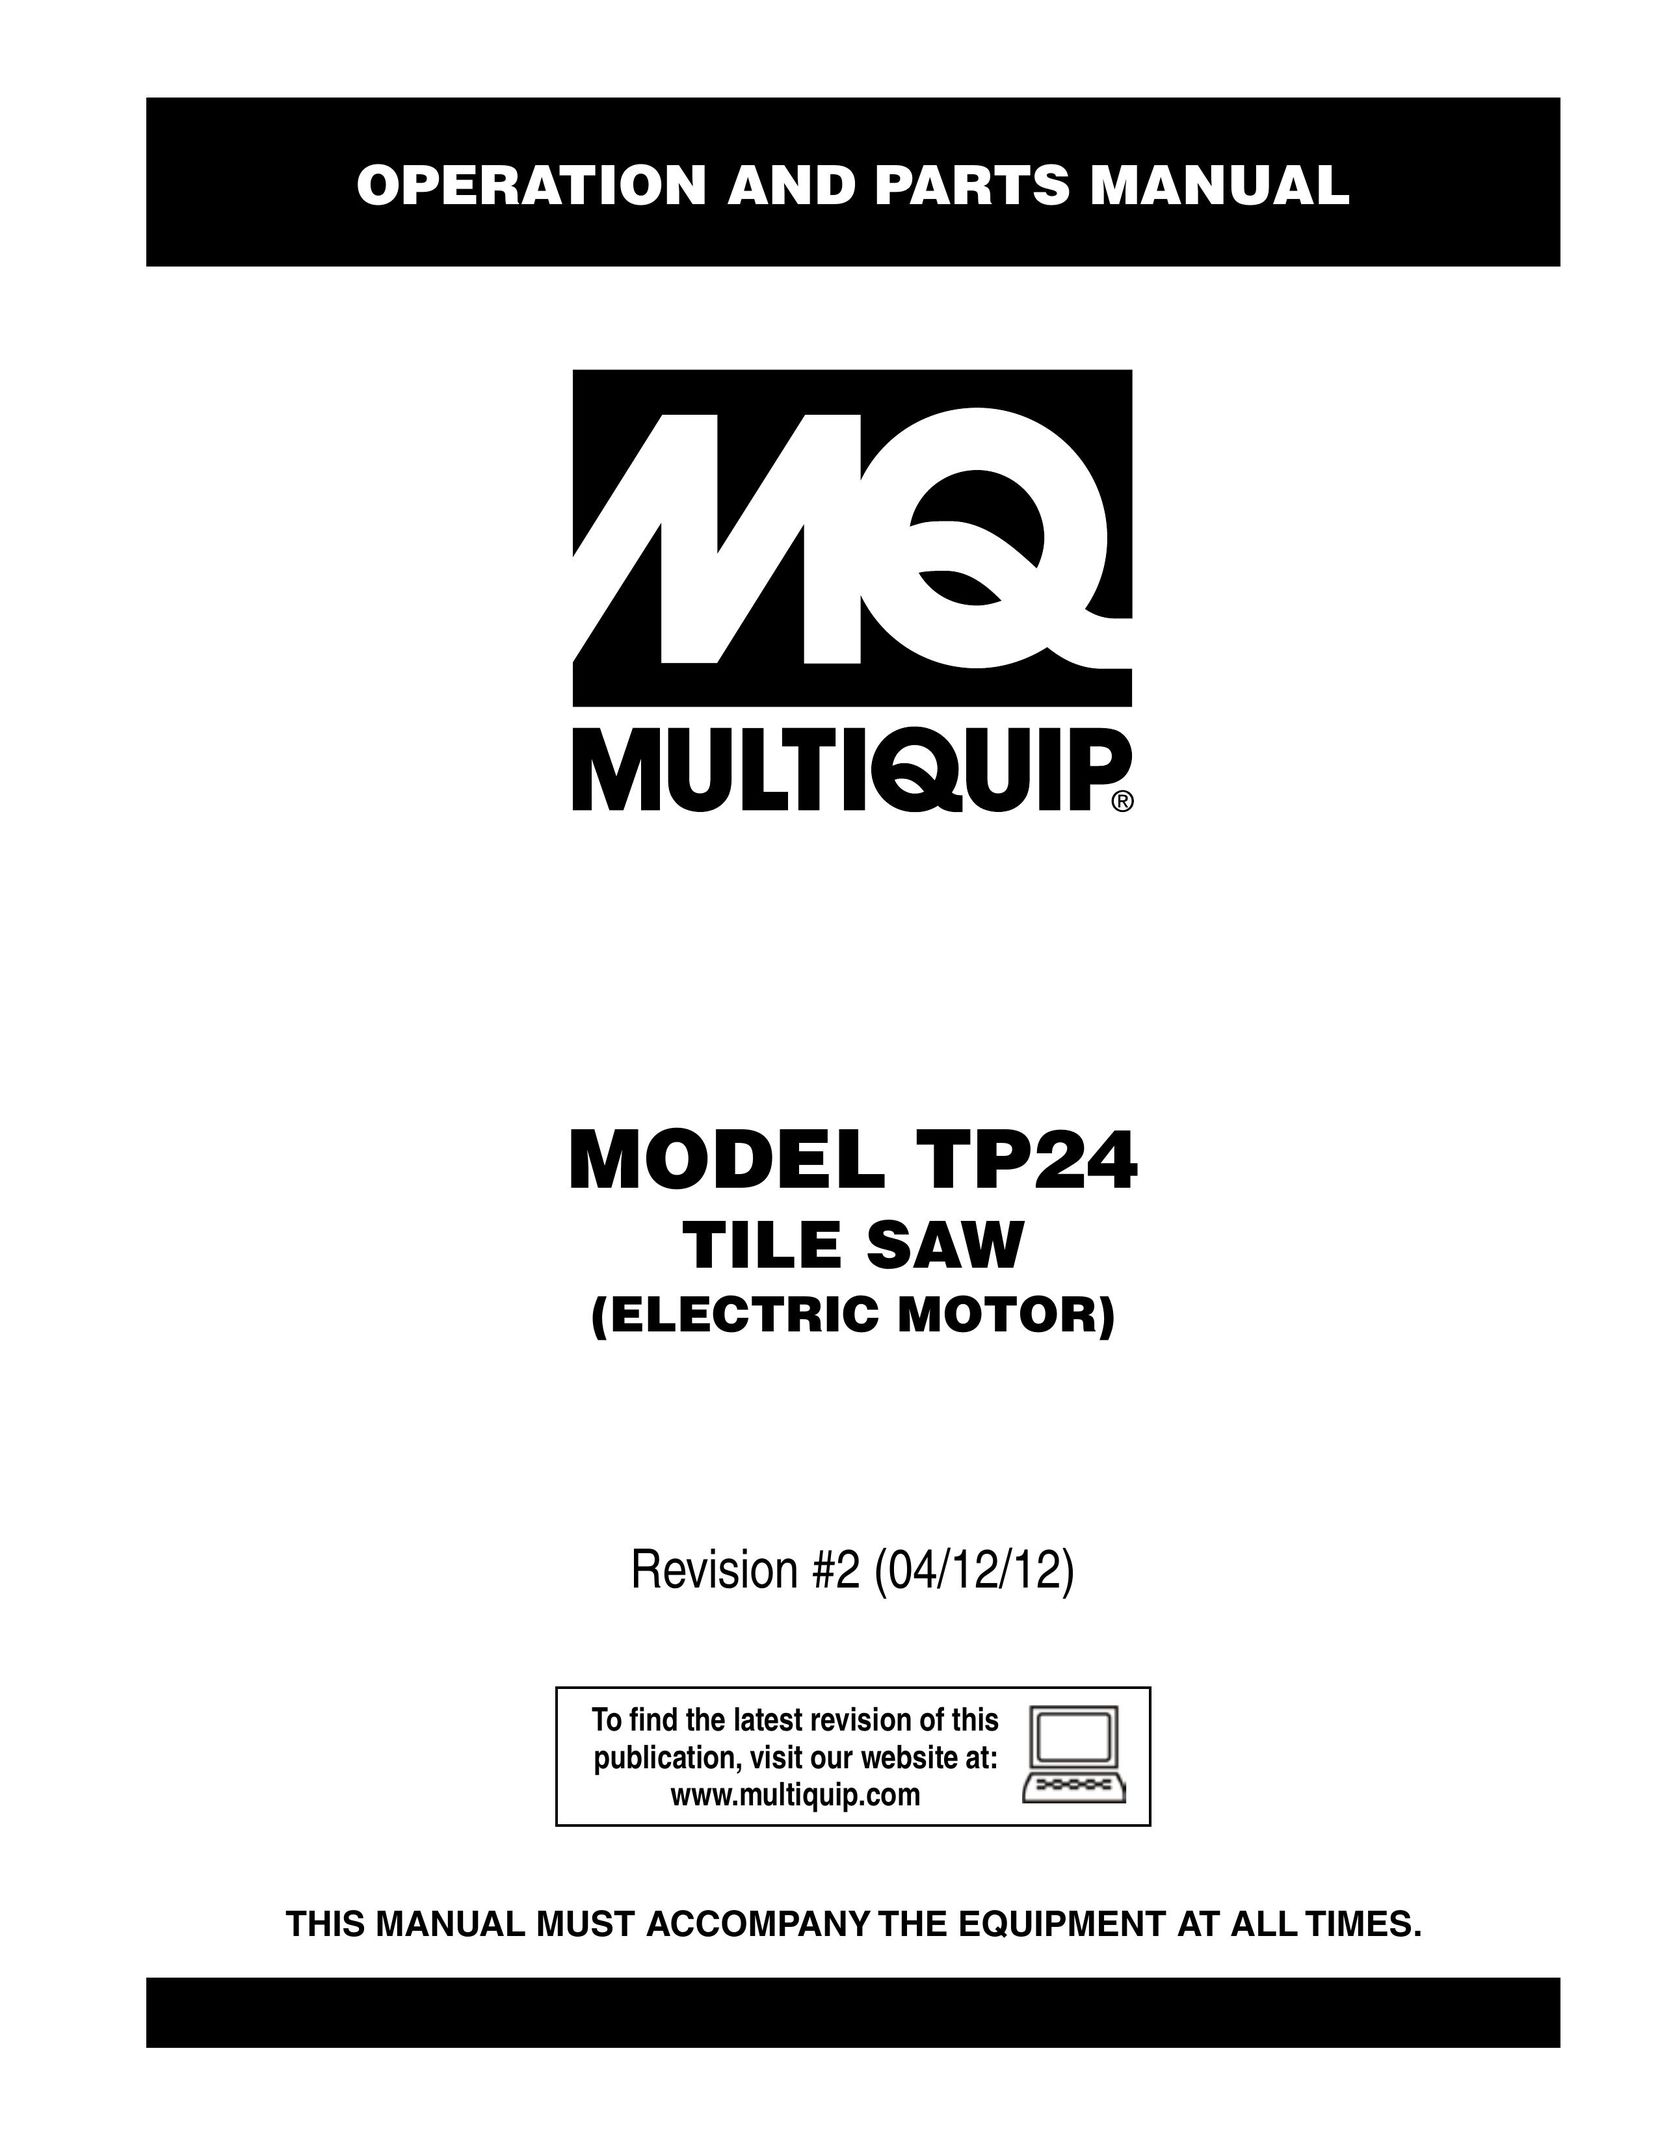 Multiquip tp24 Saw User Manual